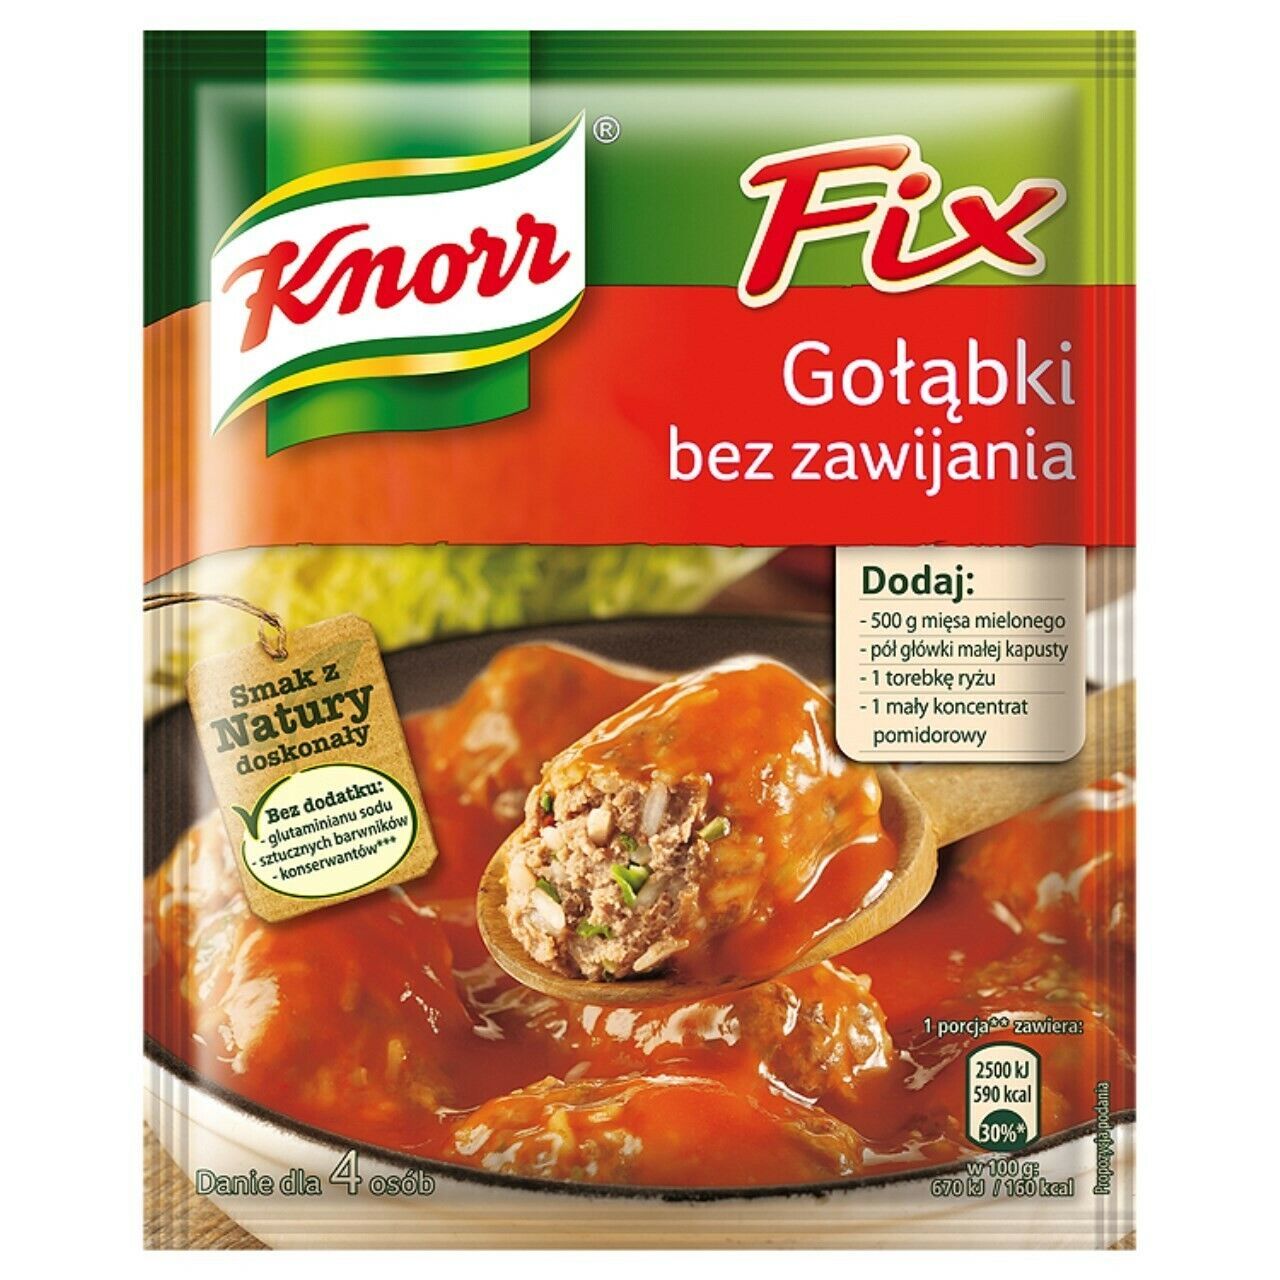 Knorr Golabki bez zawijania cabbage rolls Made in Poland FREE SHIPPING - $6.92